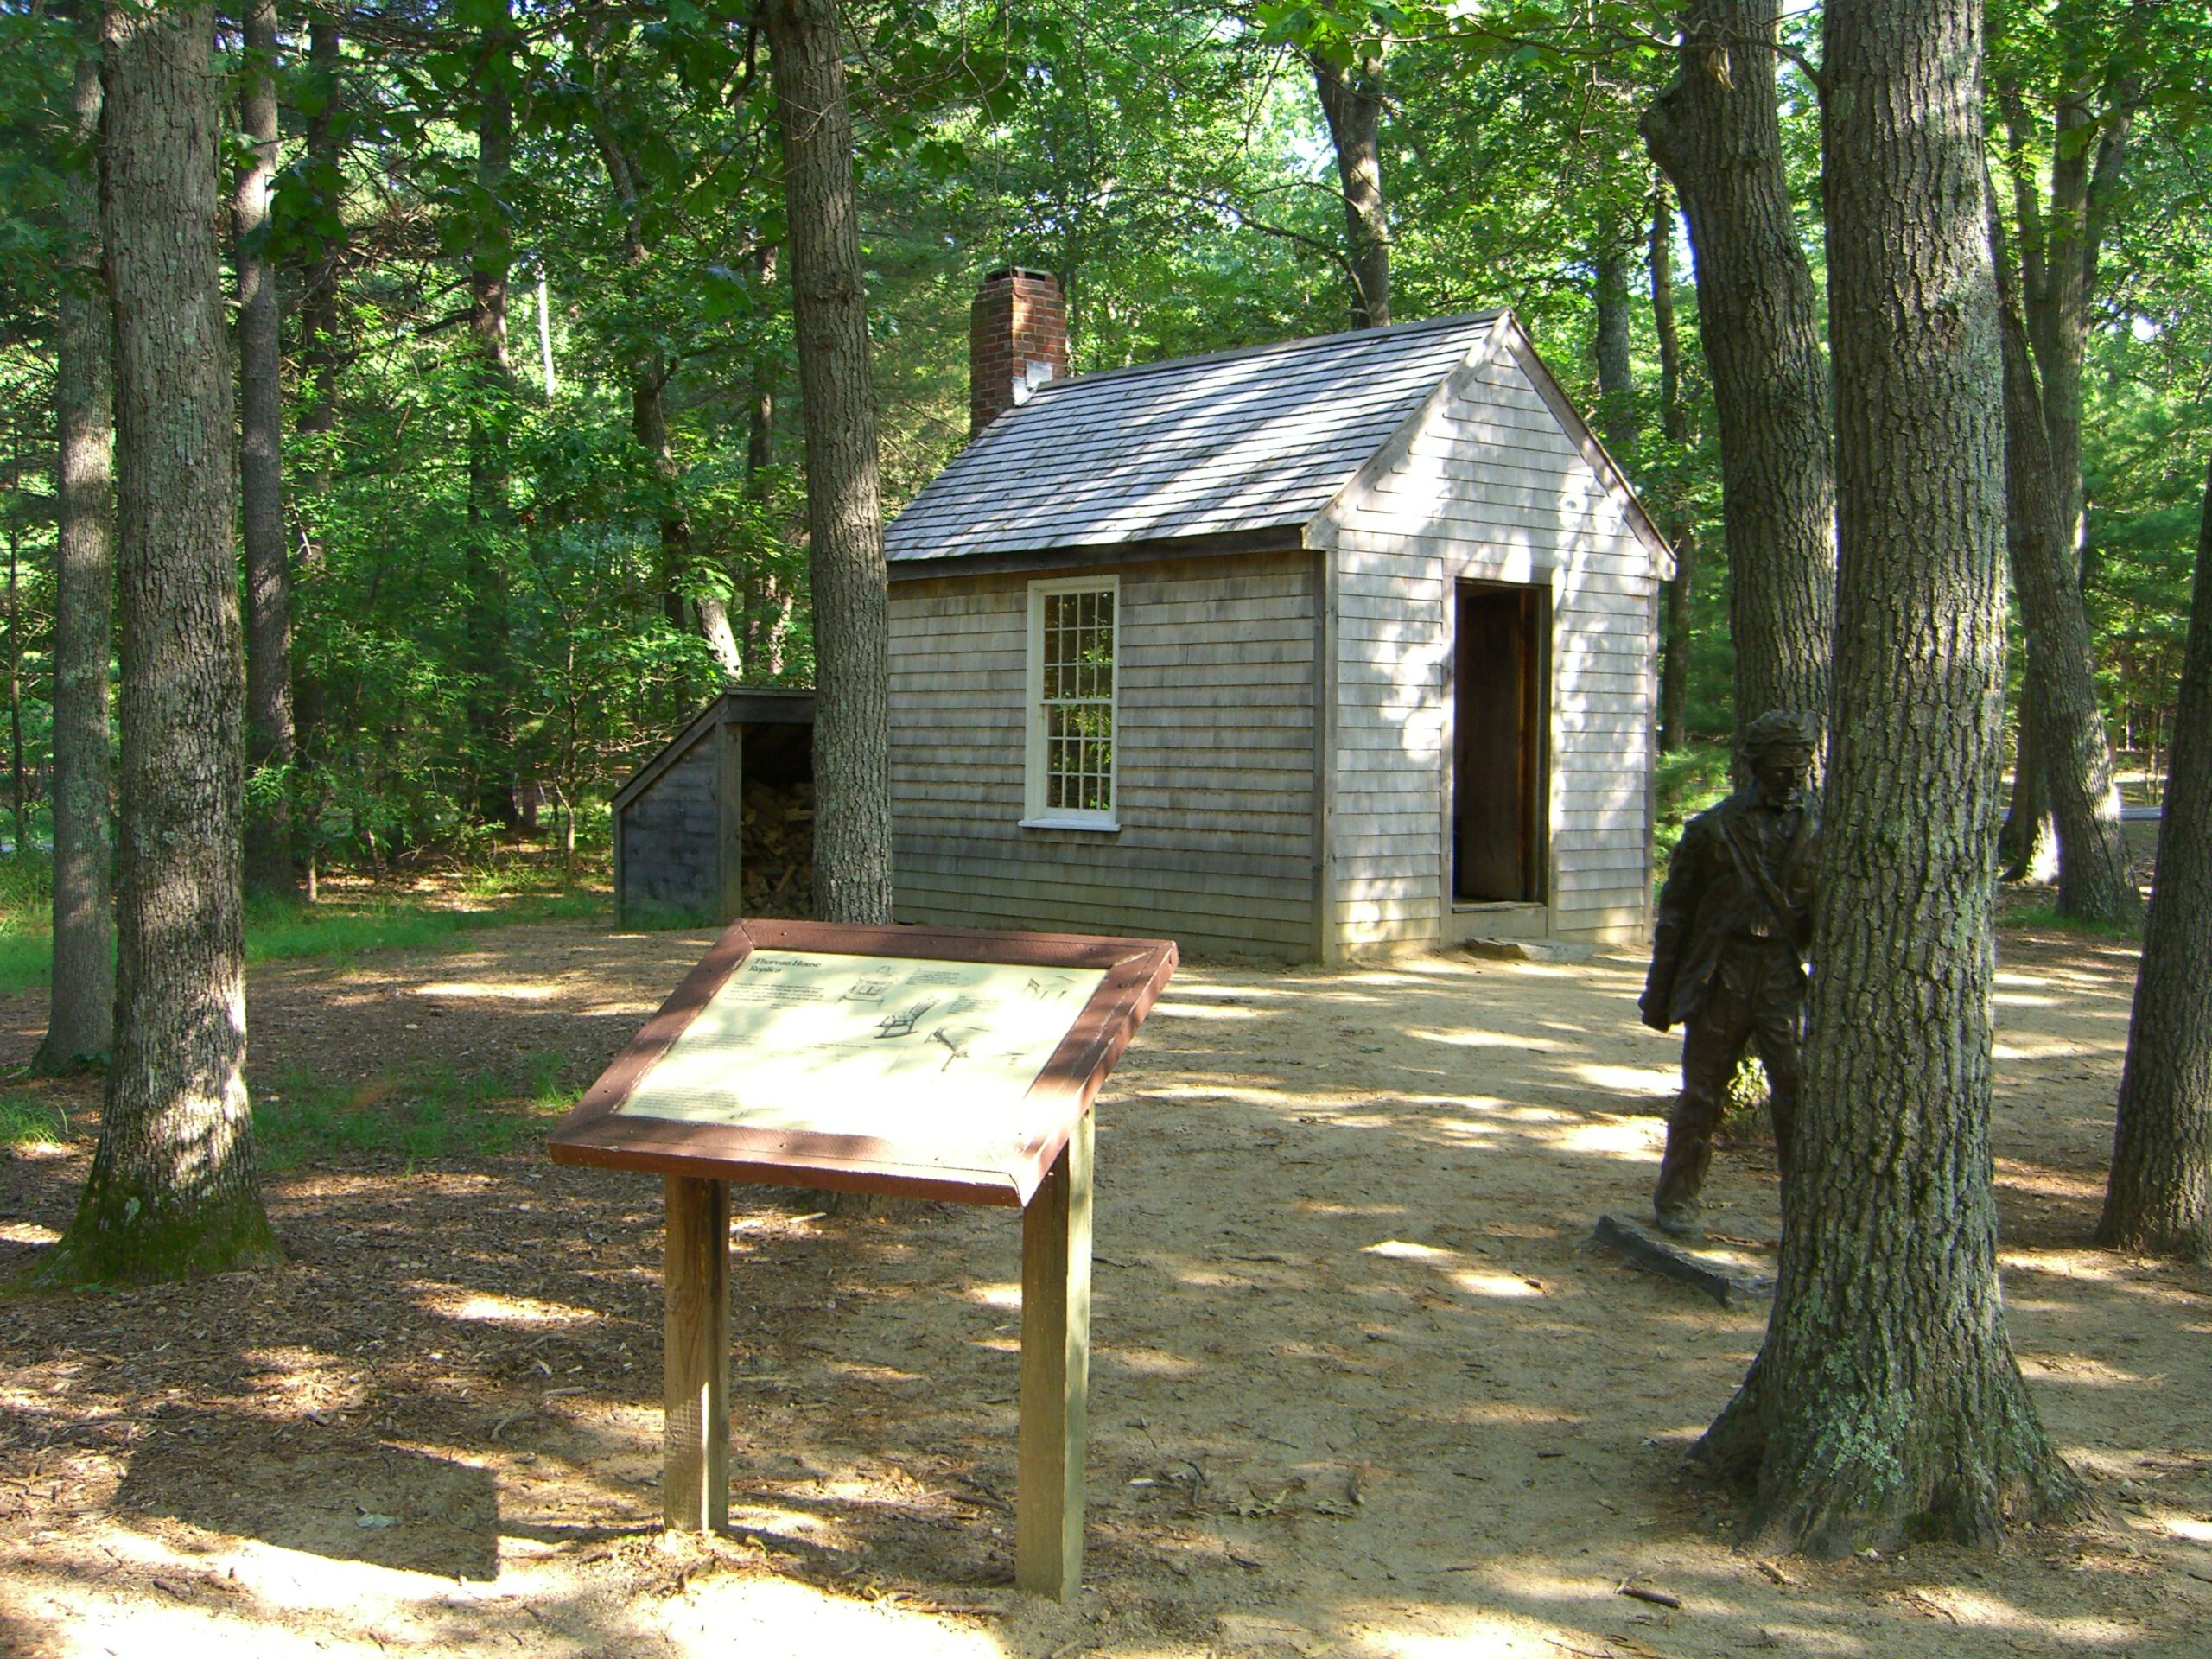 A replica of Thoreau's cabin stands near Walden Pond.